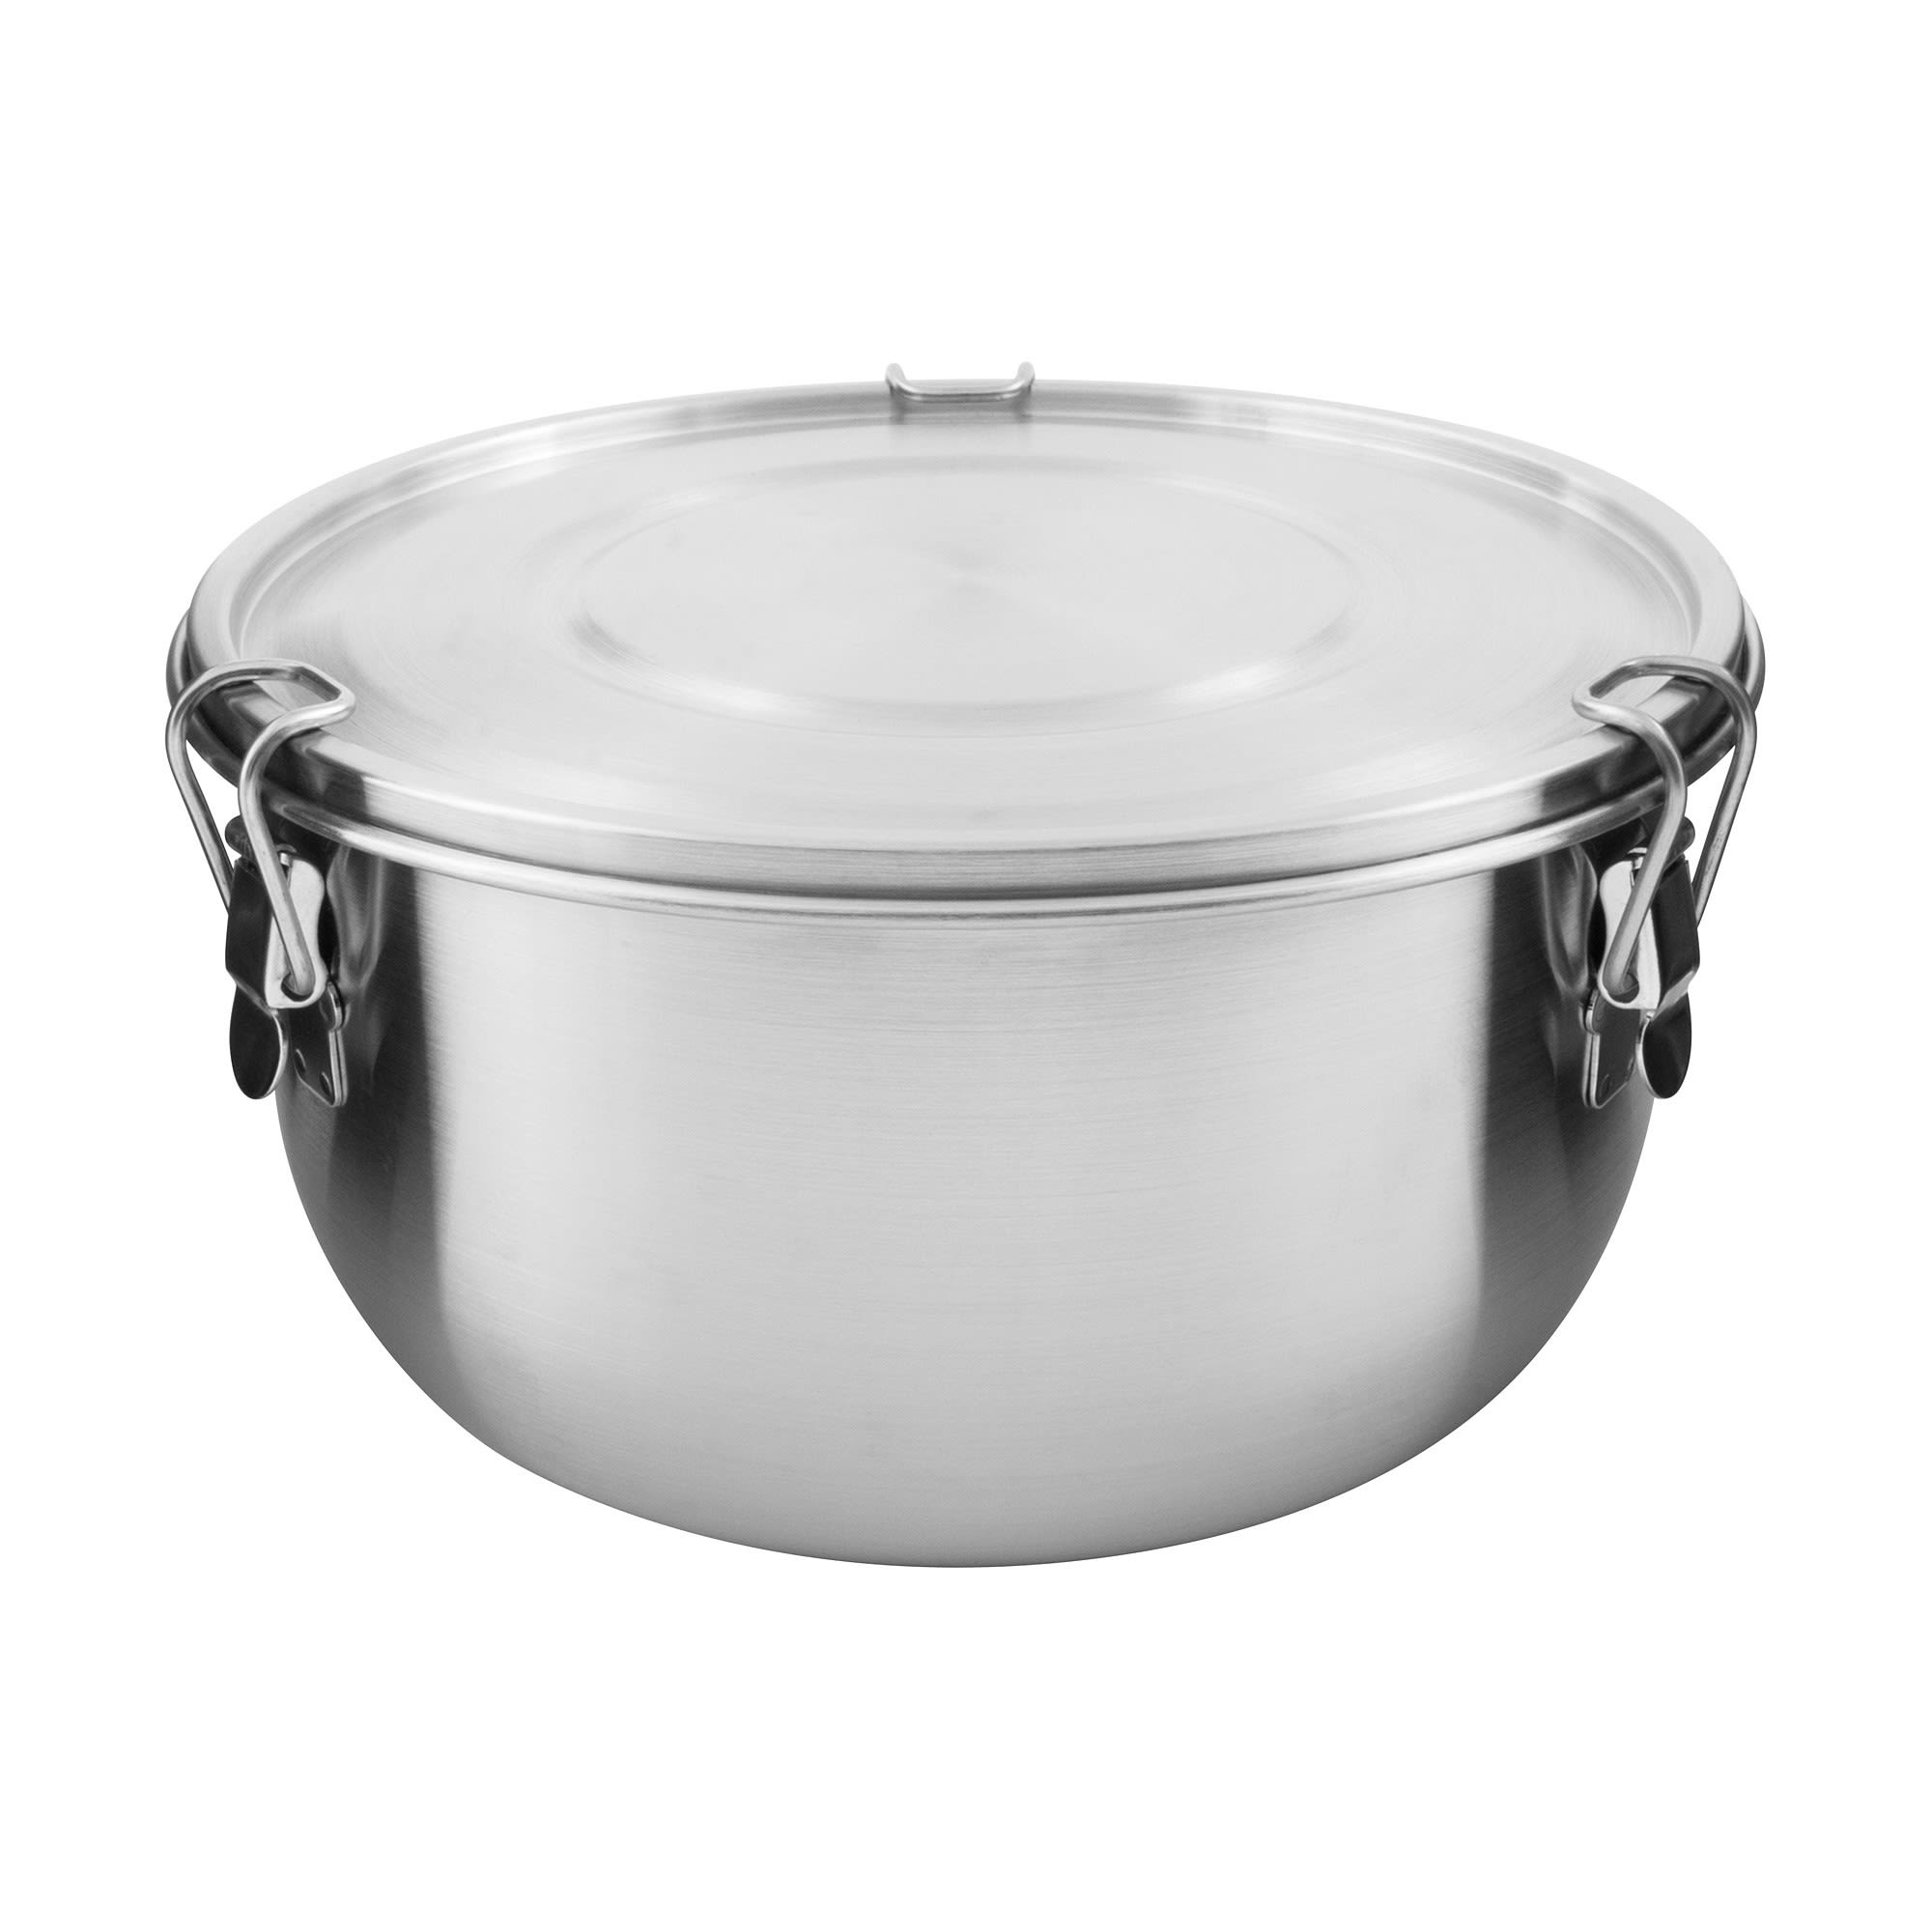 Tatonka Foodcontainer 1-5L Grau- Geschirr und Besteck- Grsse 1-5l - Farbe Silver